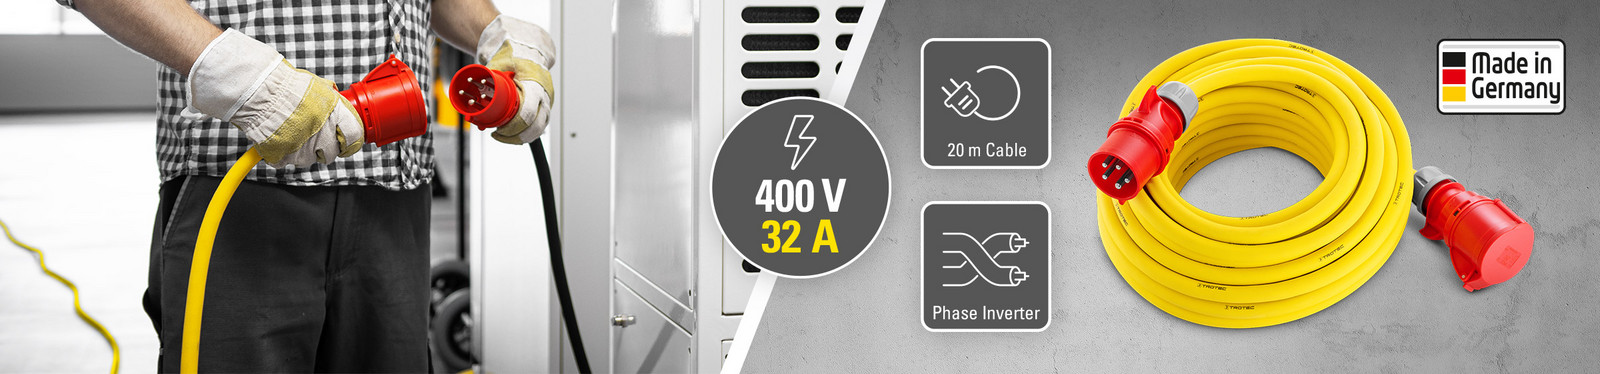 Професійний подовжувач 400 V (32 A) – Made in Germany